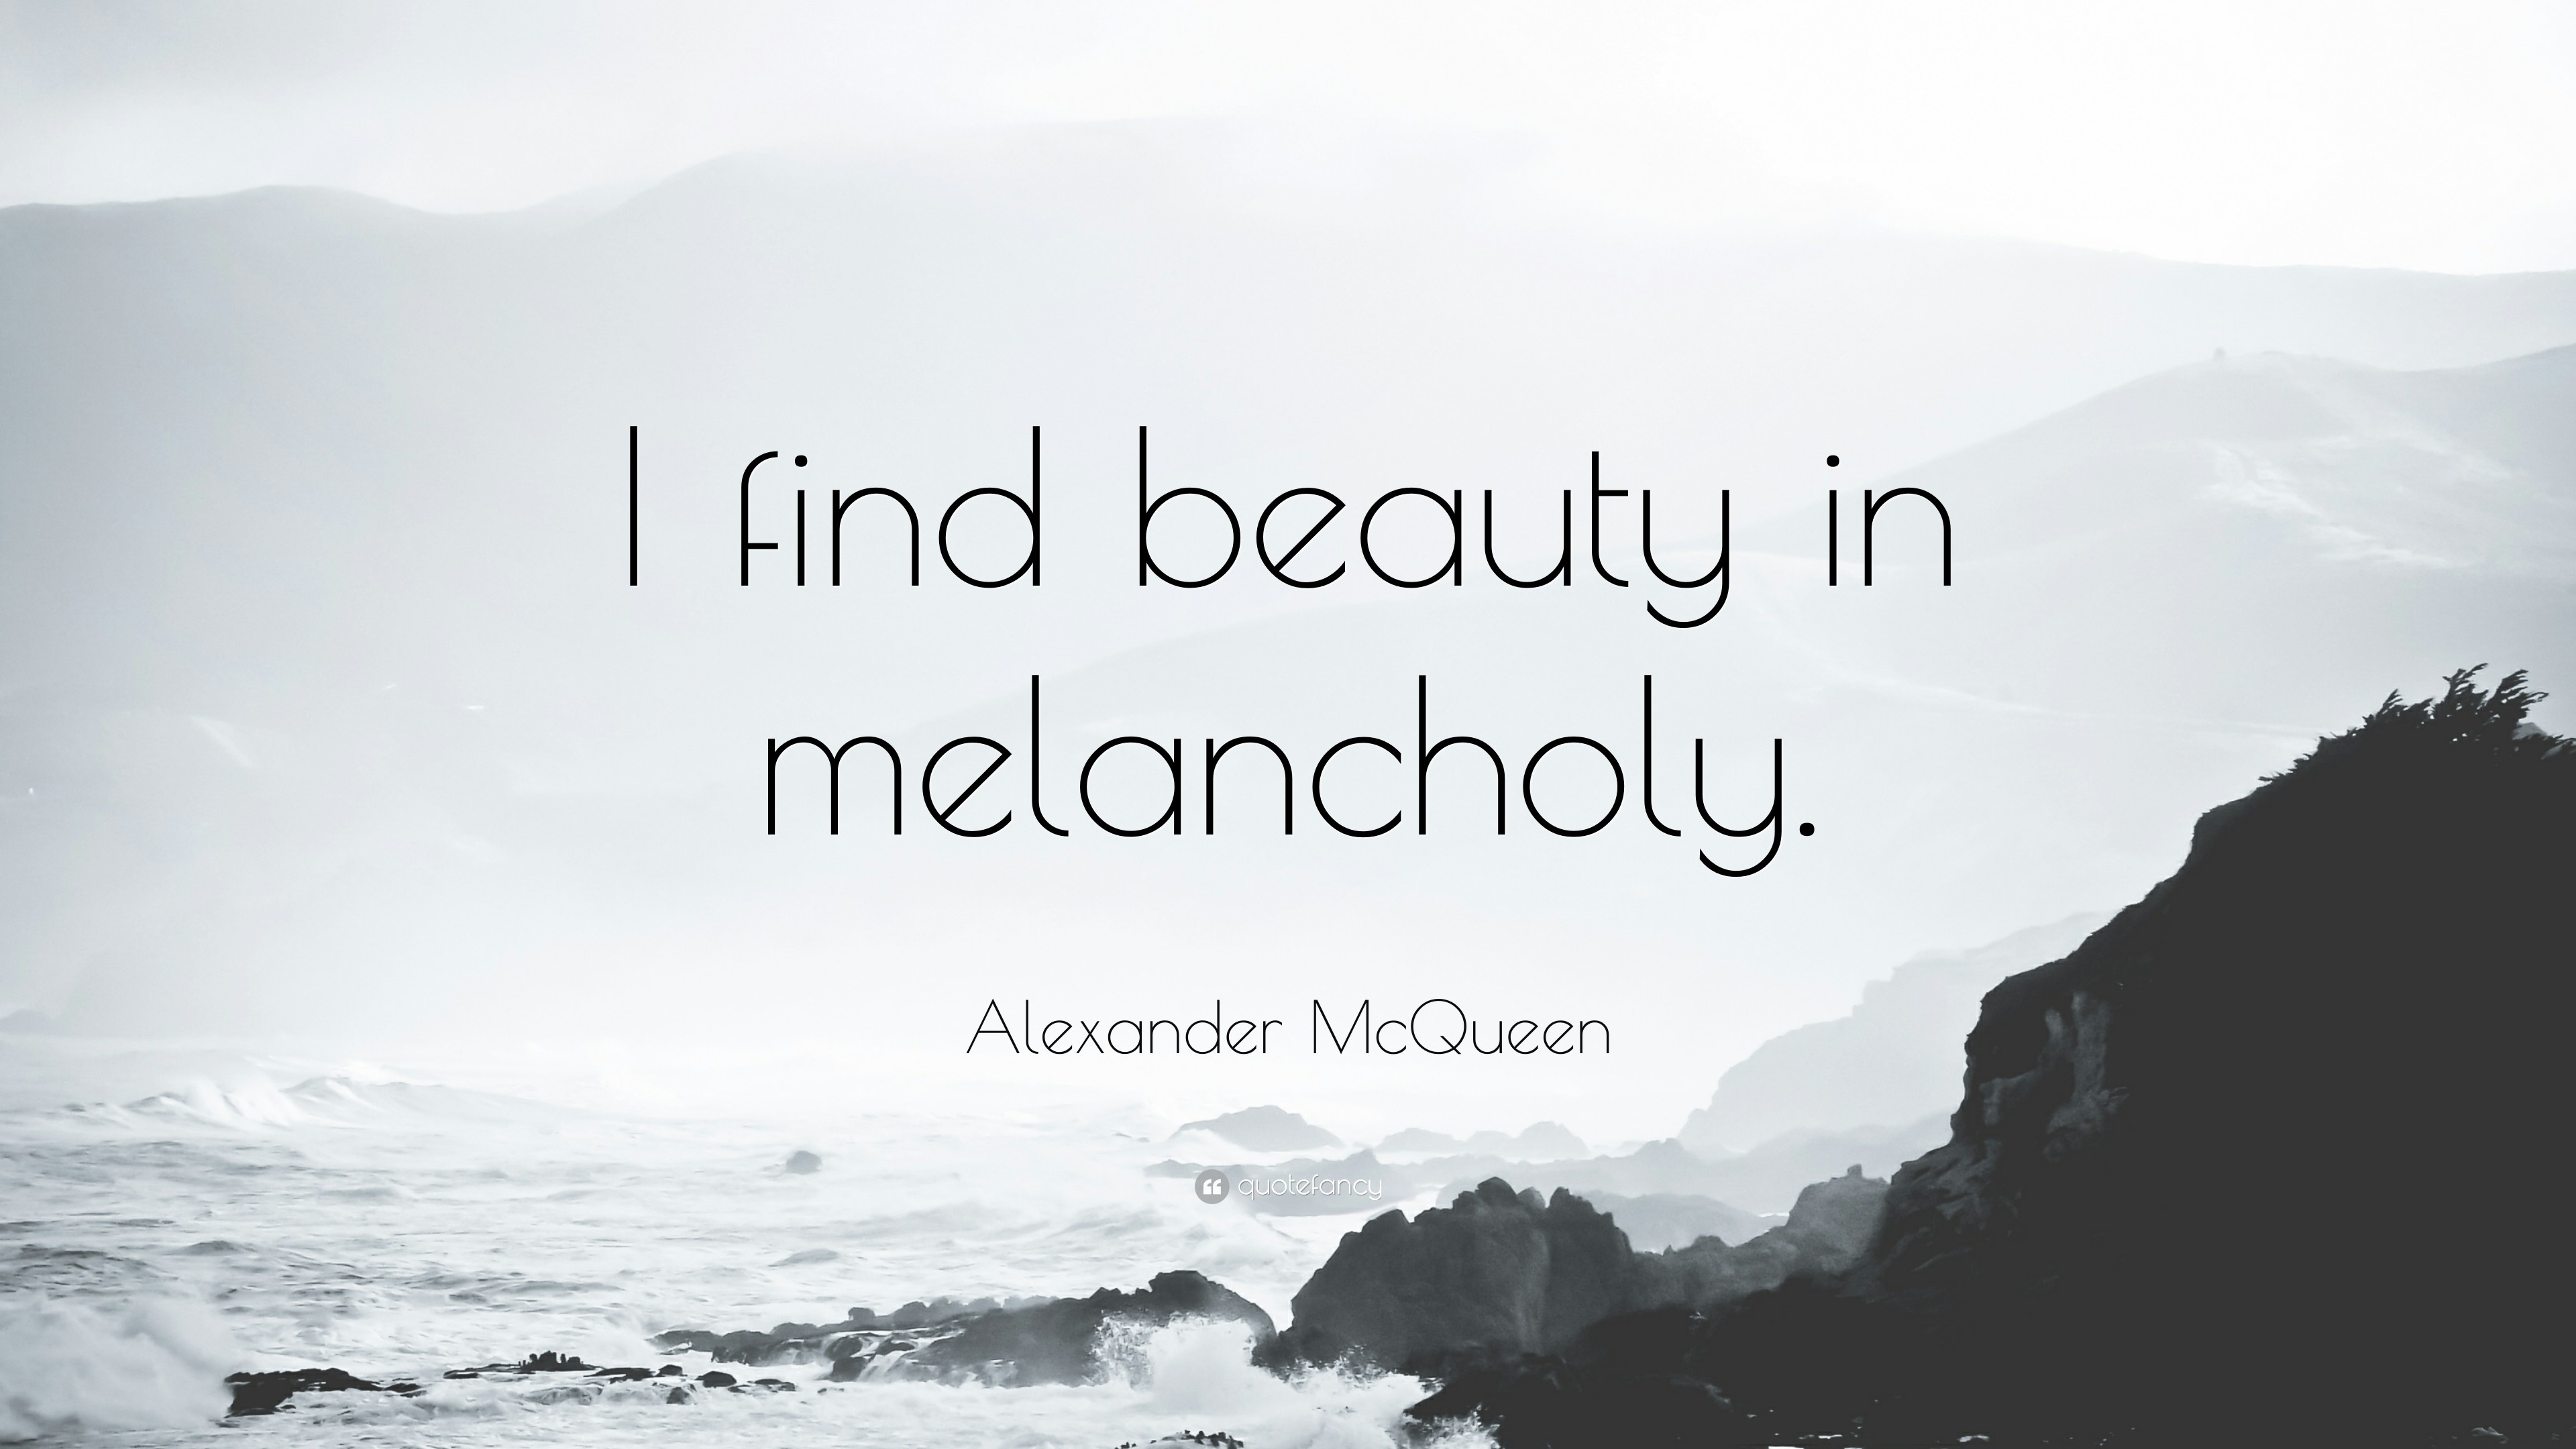 3840x2160 Alexander McQueen Quote: “I find beauty in melancholy.”